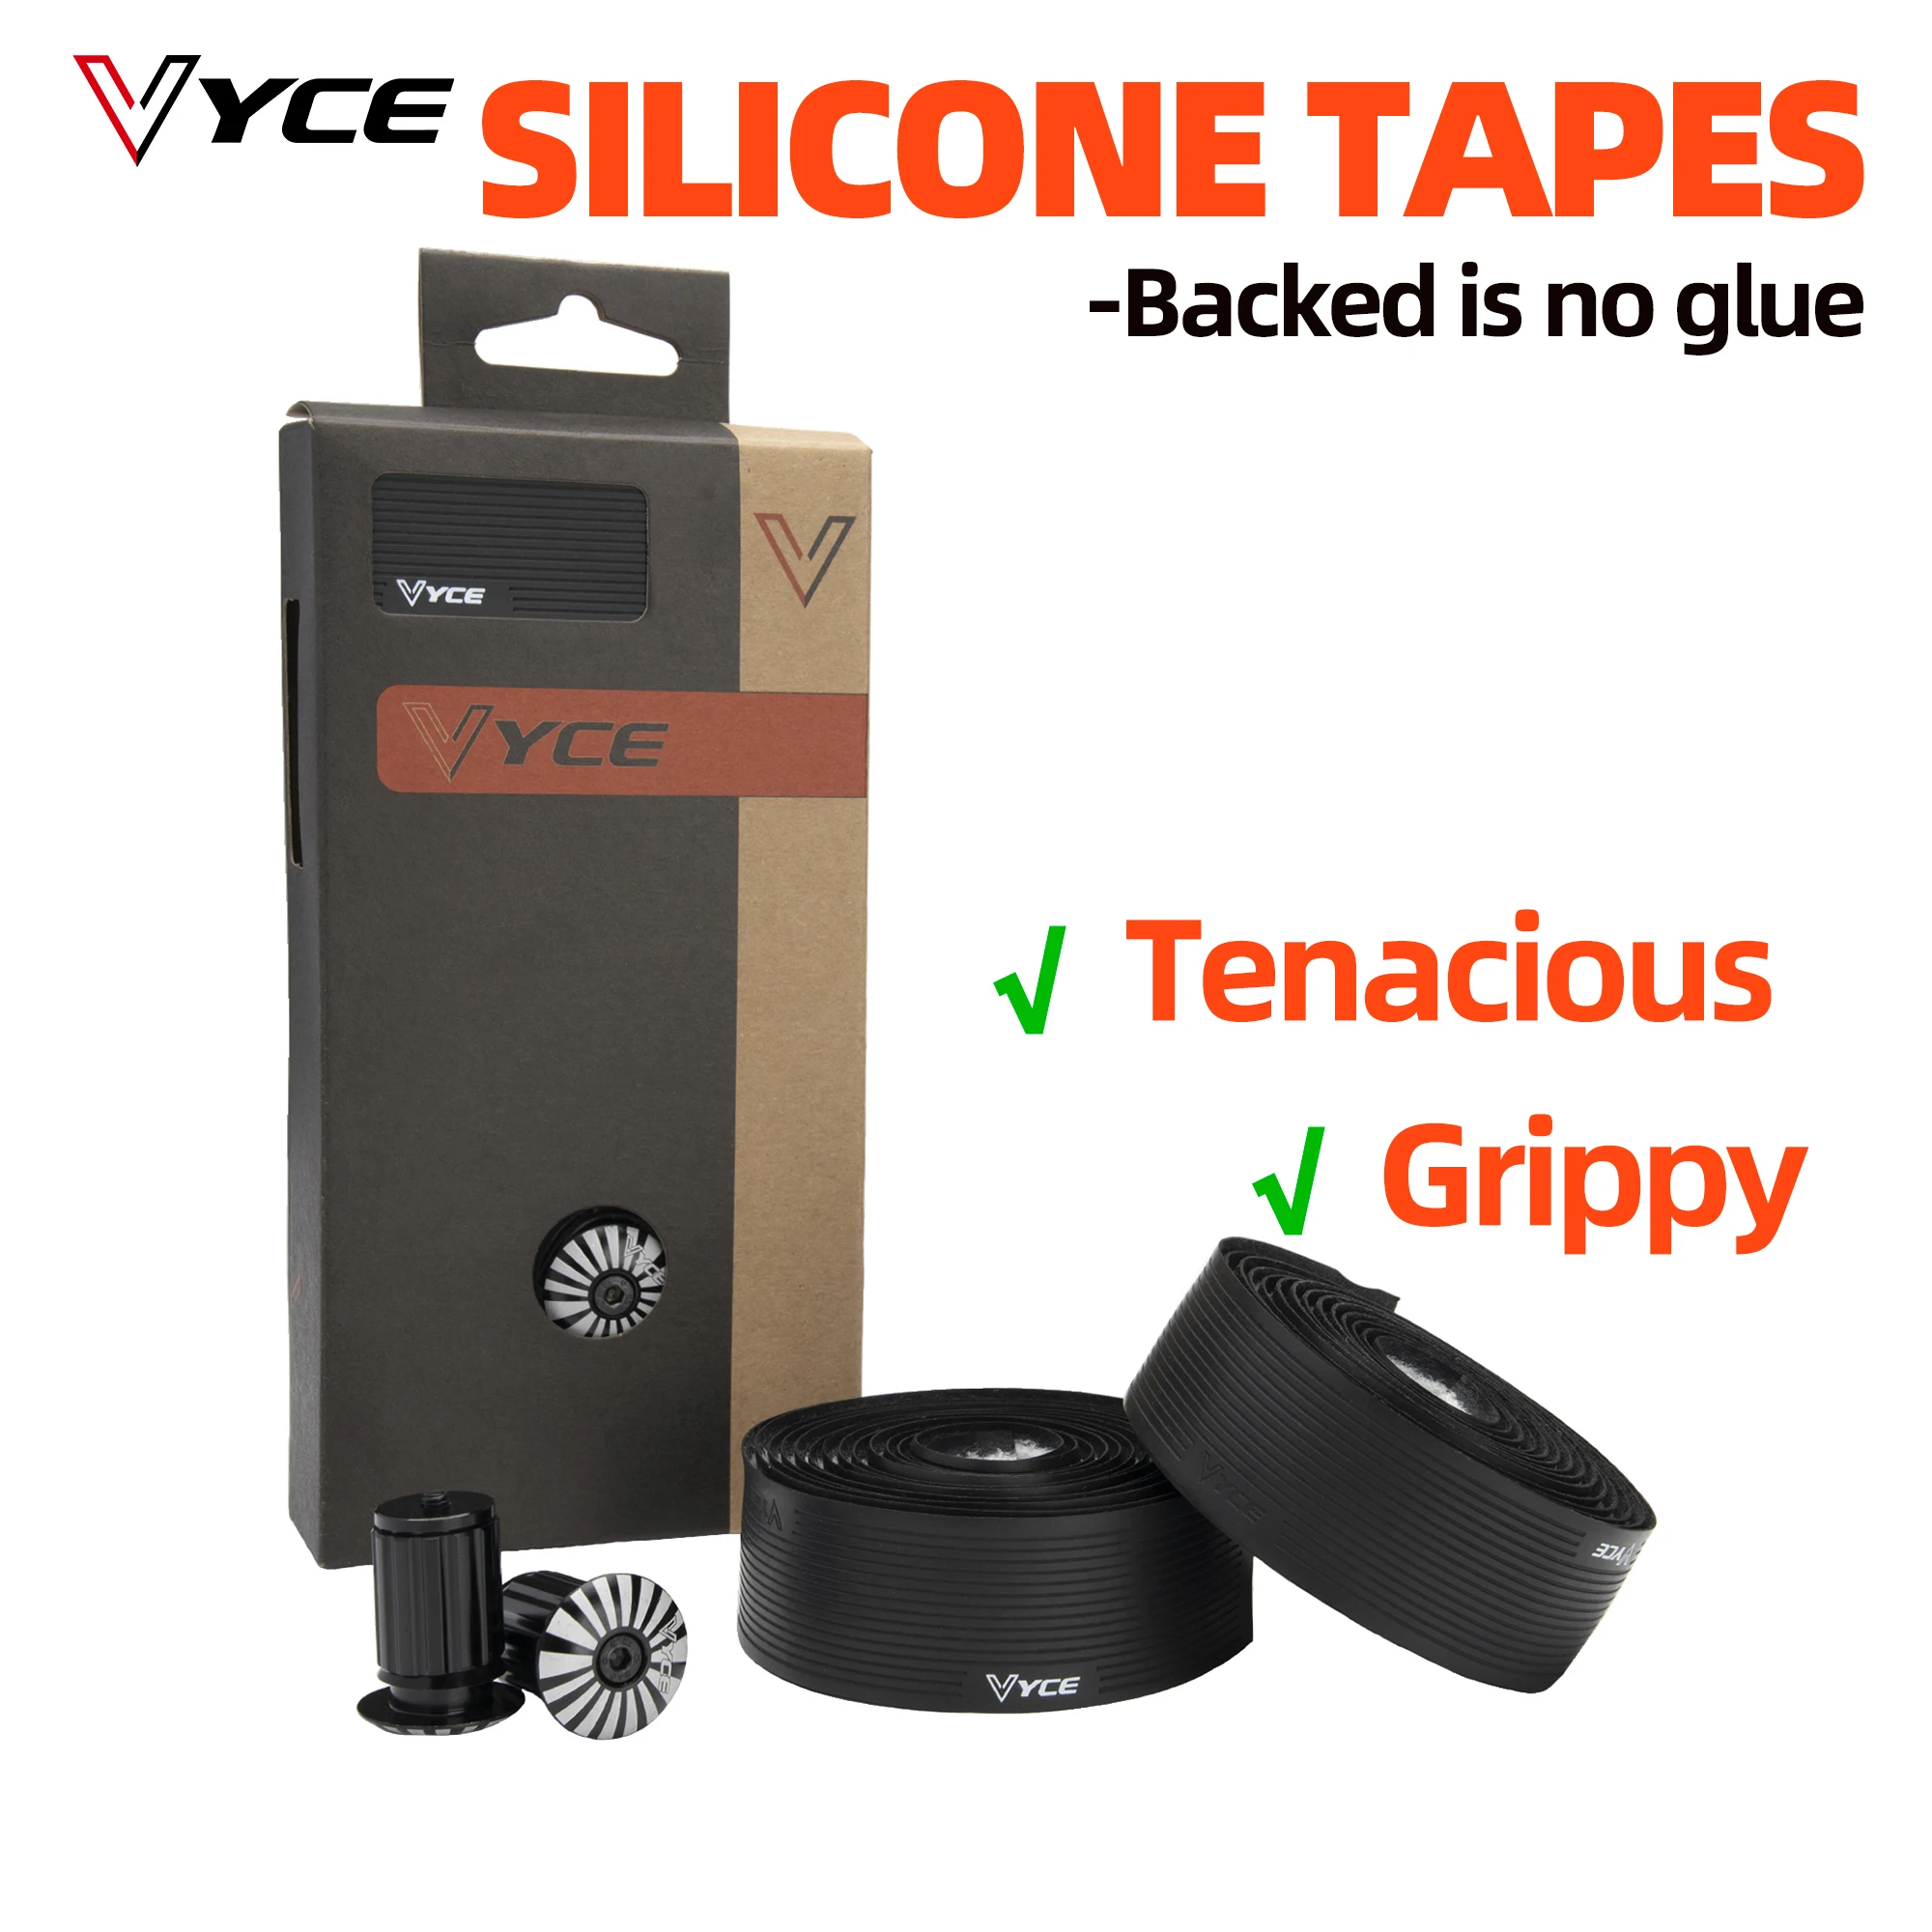 

VYCE-Silicone Handlebar Tape, Road Bicycle Tape, Bike Bartape, Anti-slip Silica Gel, Handle Bar Tape, Cycling Wrap